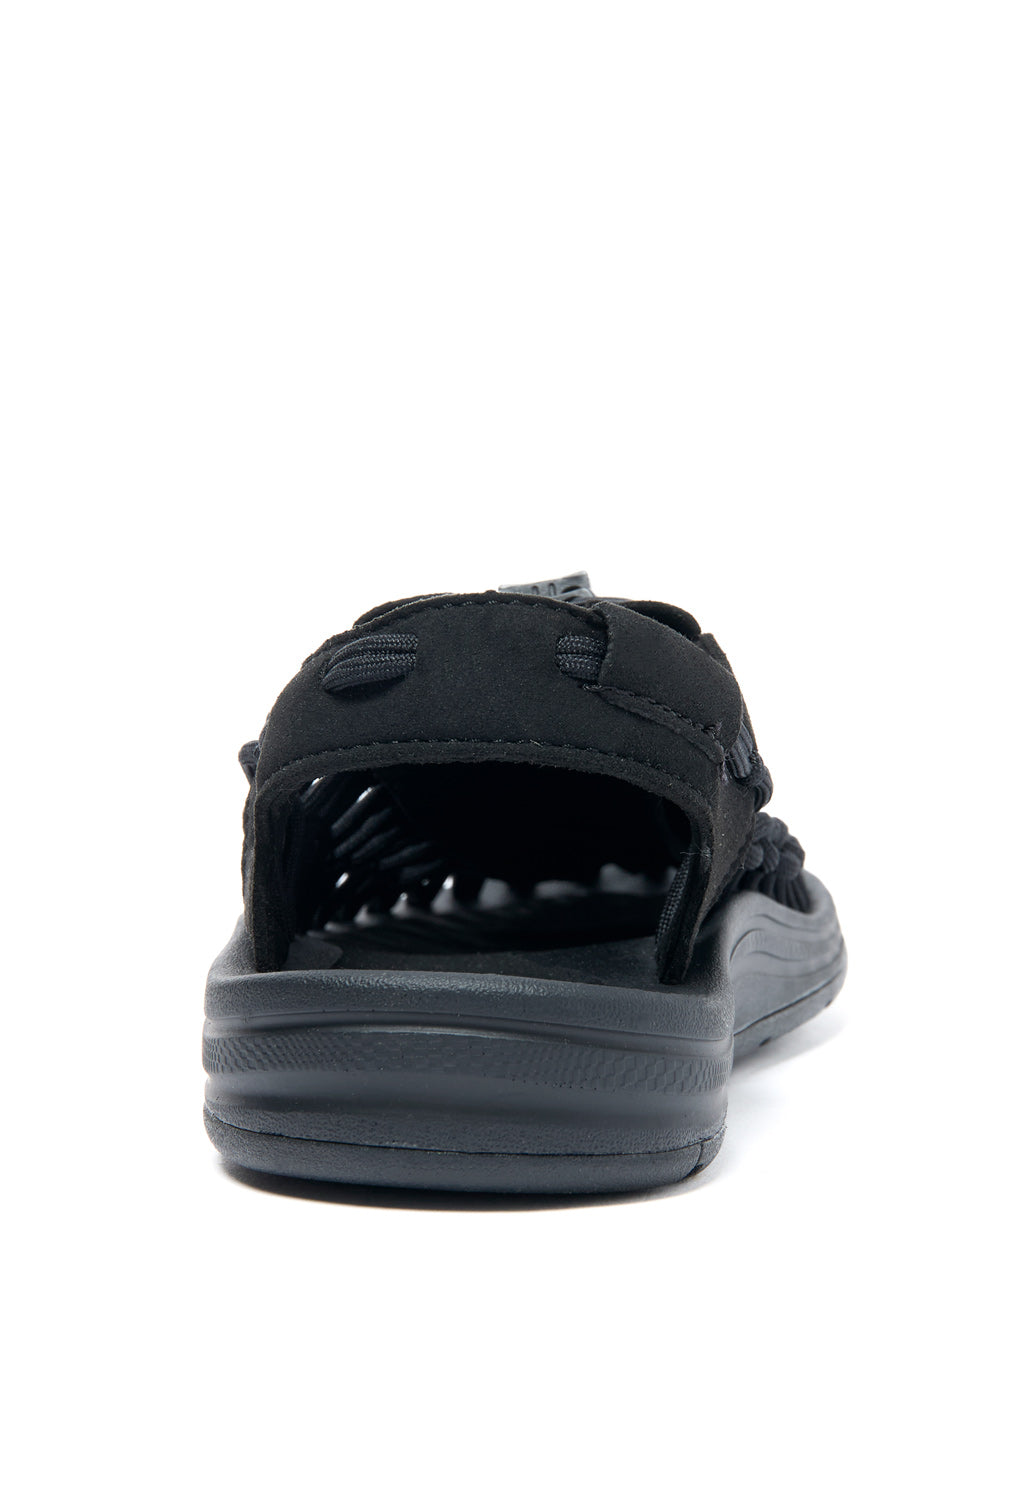 Keen Women's Uneek Sandals - Black / Black